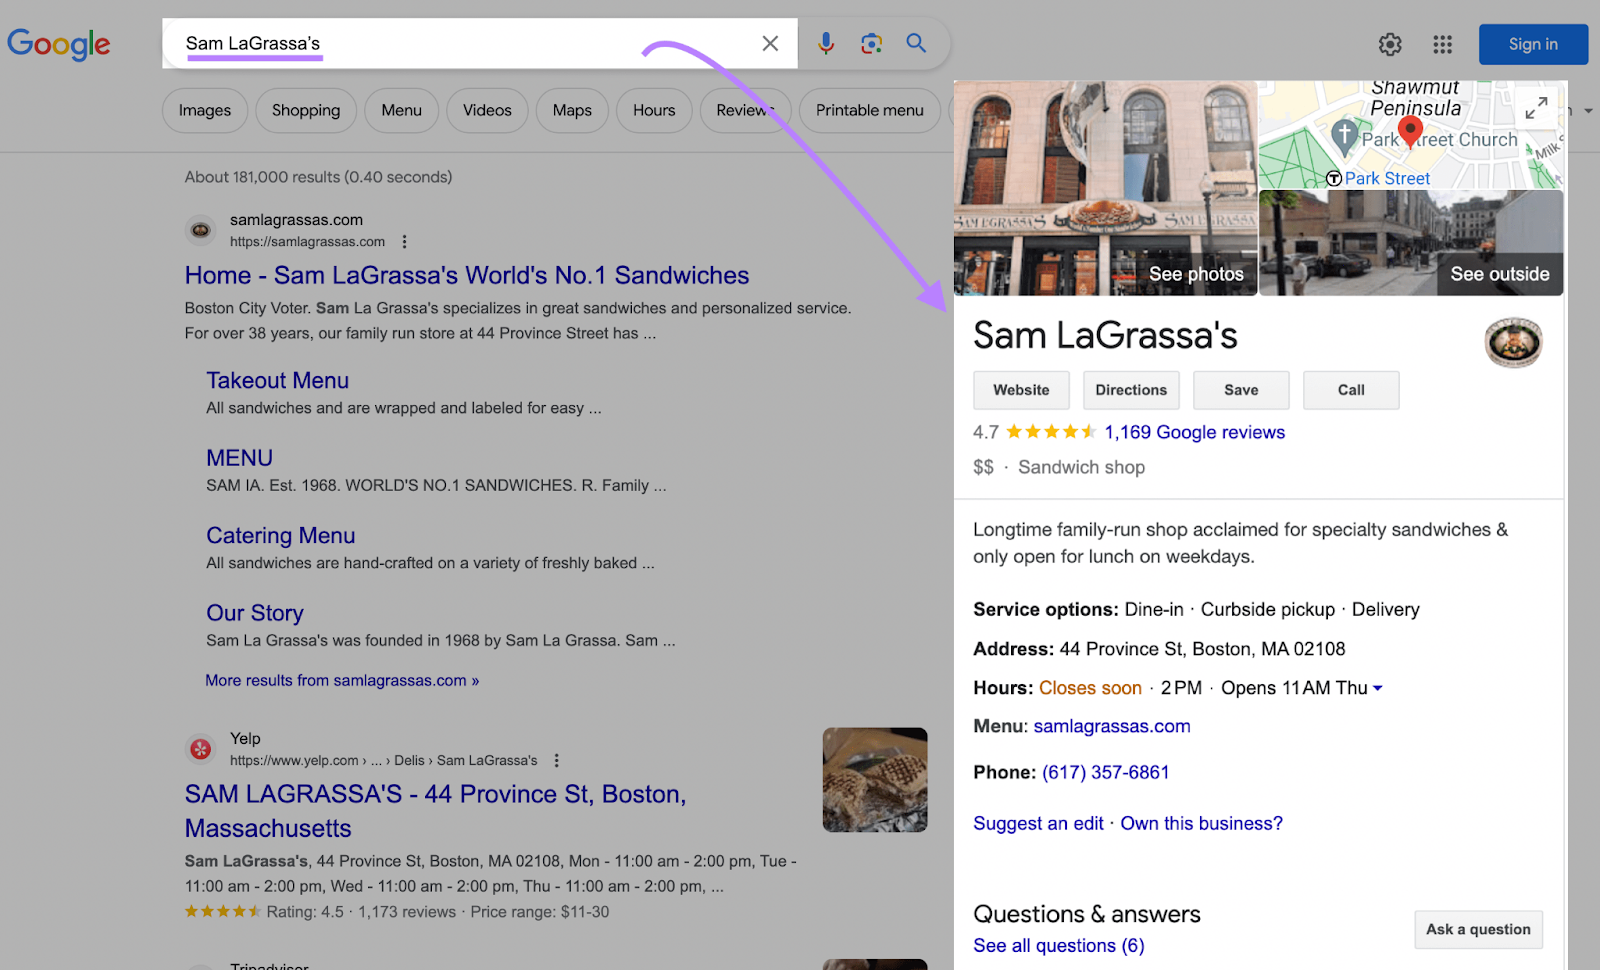 Sam LaGrassa's business profile on Google SERP